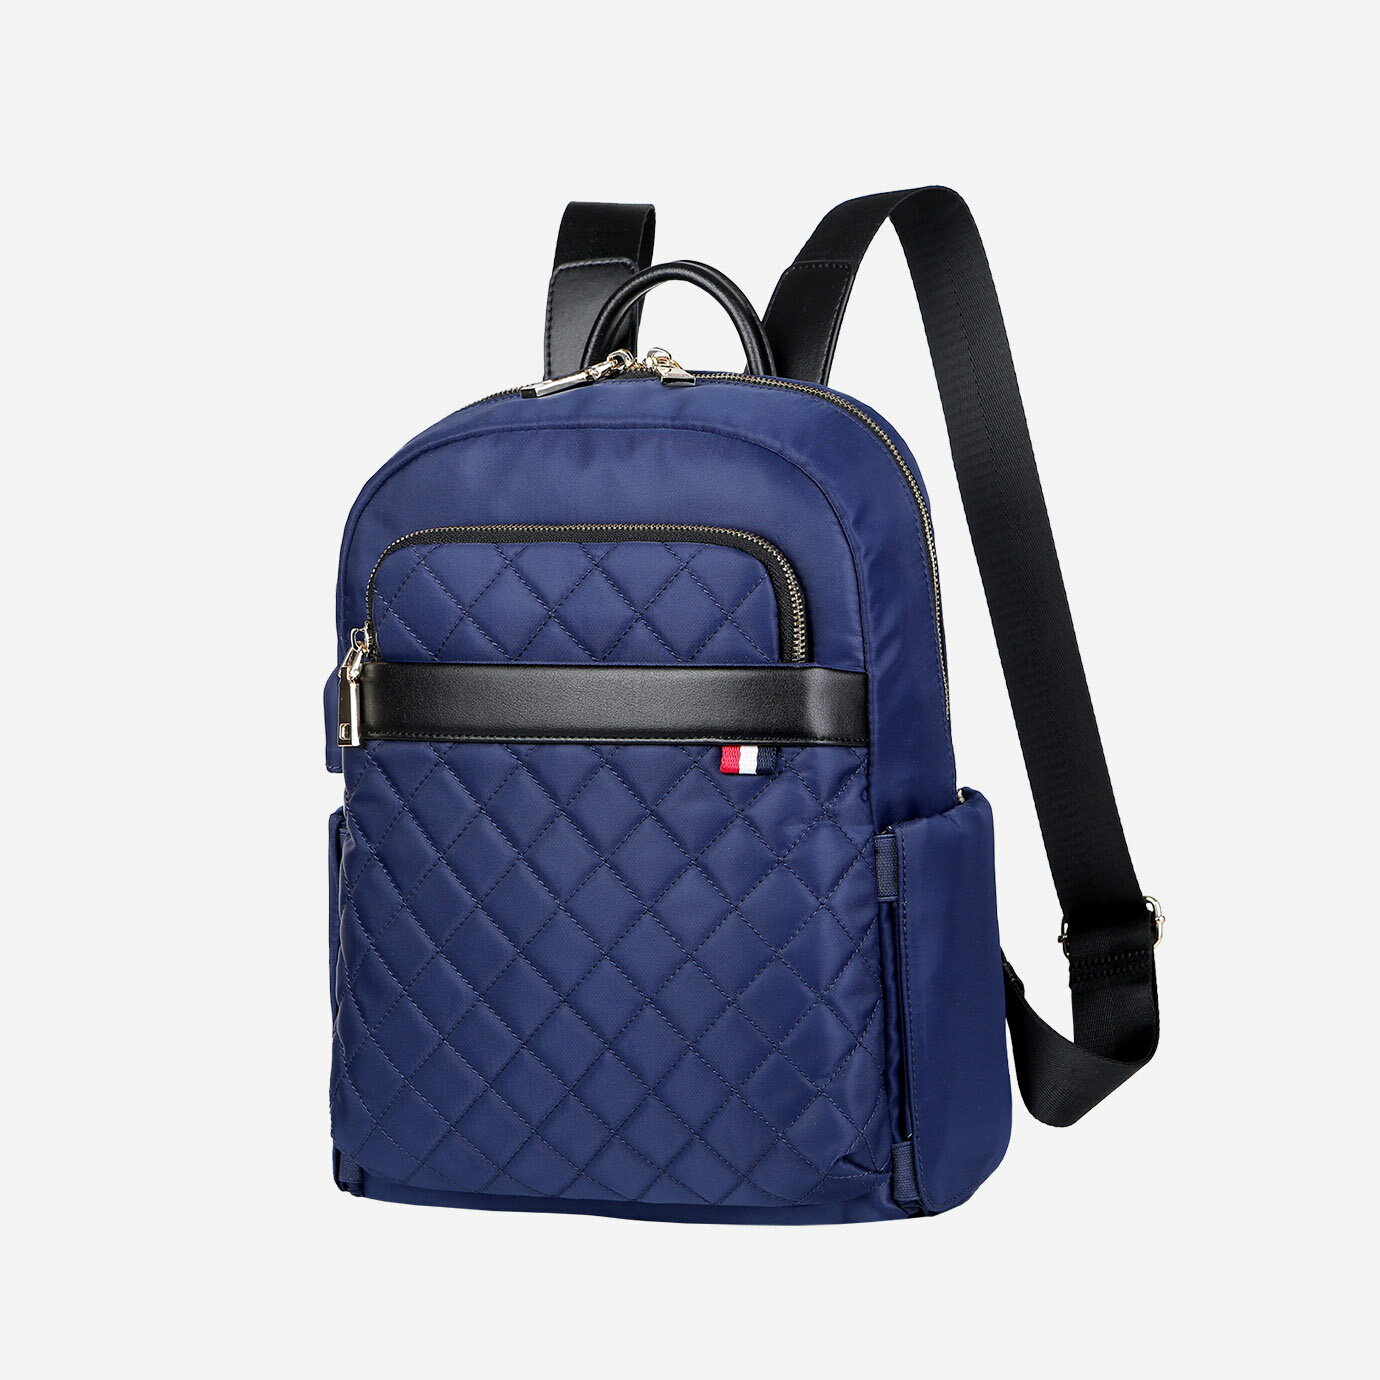 Nordace Ellie Mini- 後背包 充電雙肩包 雙肩包 筆電包 電腦包 旅行包 休閒包 防水背包 7色可選-藍色 2